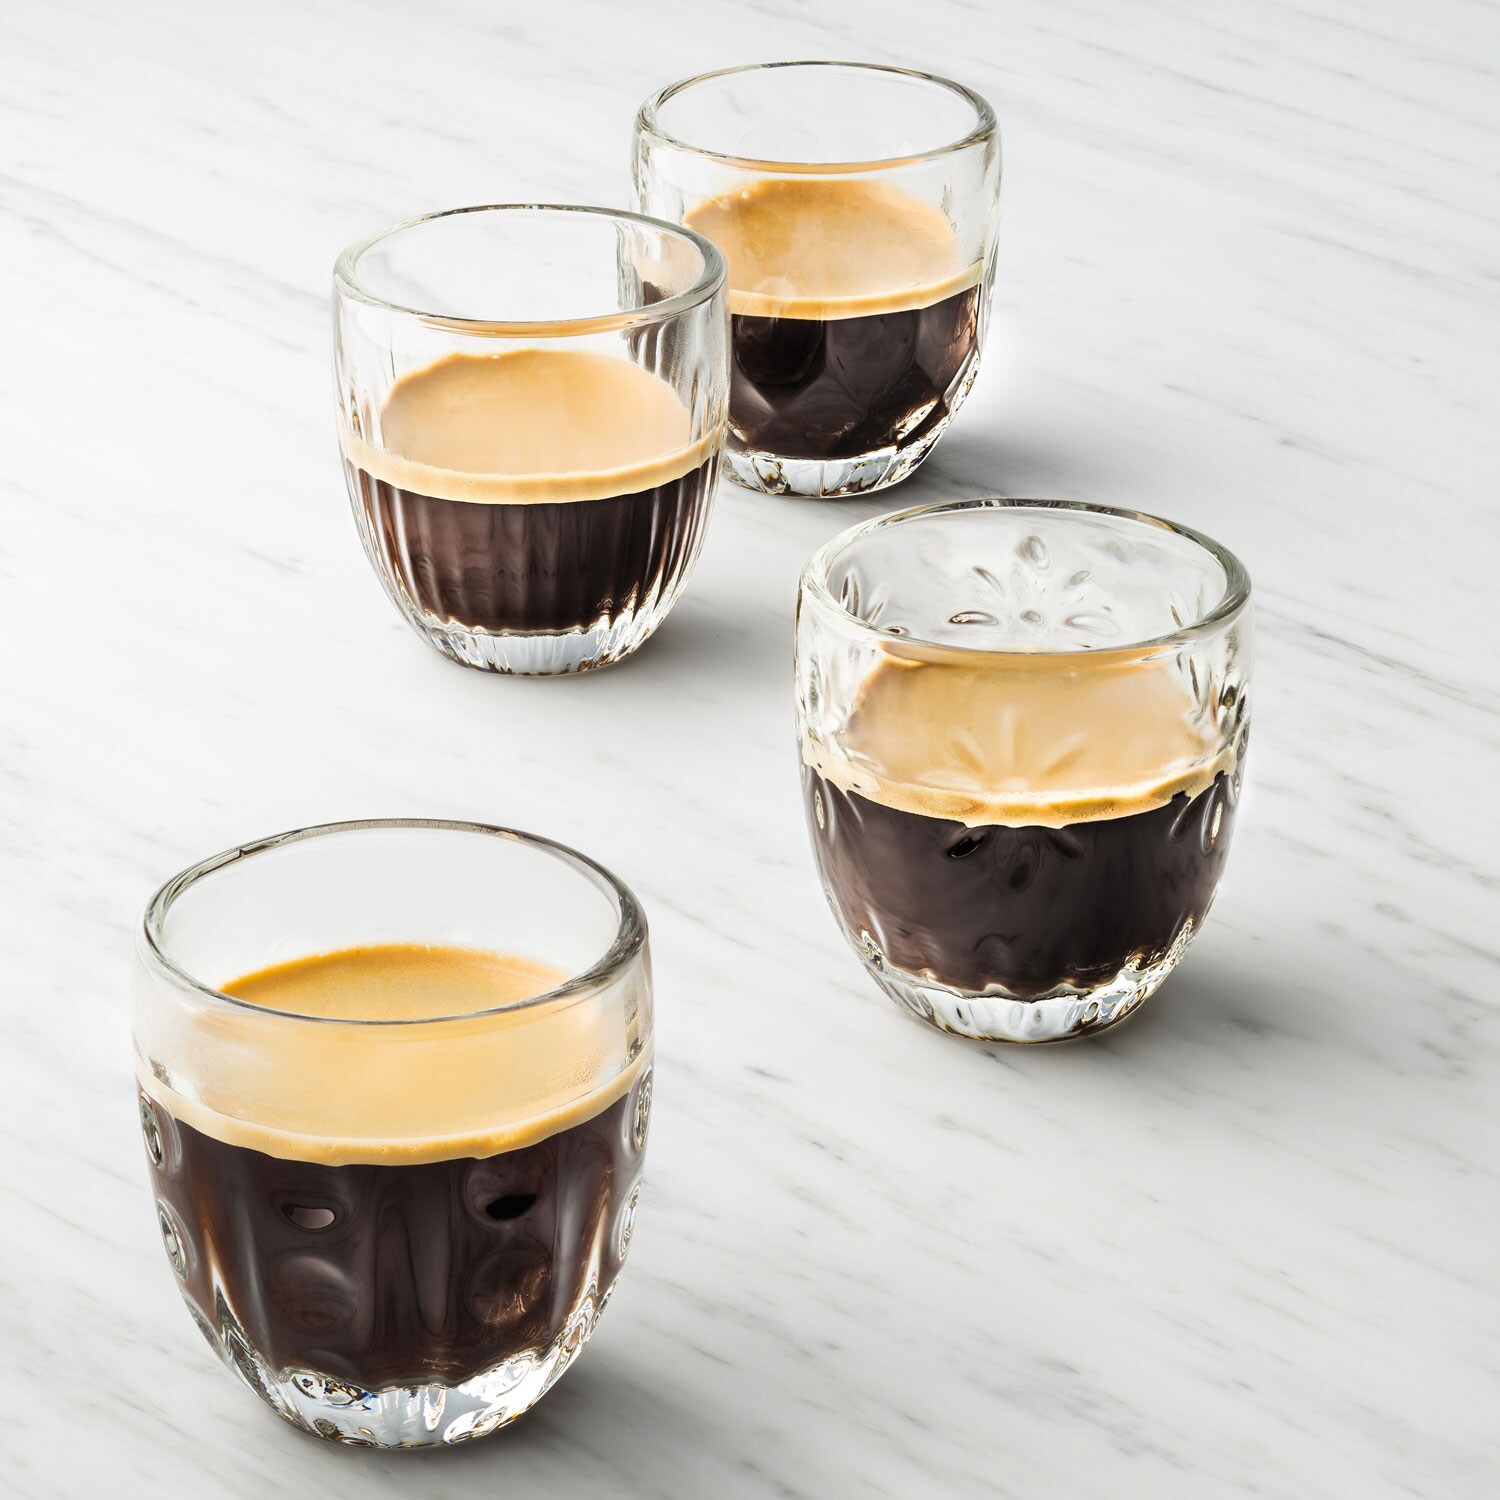 https://royaldesign.com/image/2/la-rochere-troquet-espresso-mug-10-cl-4-pack-0